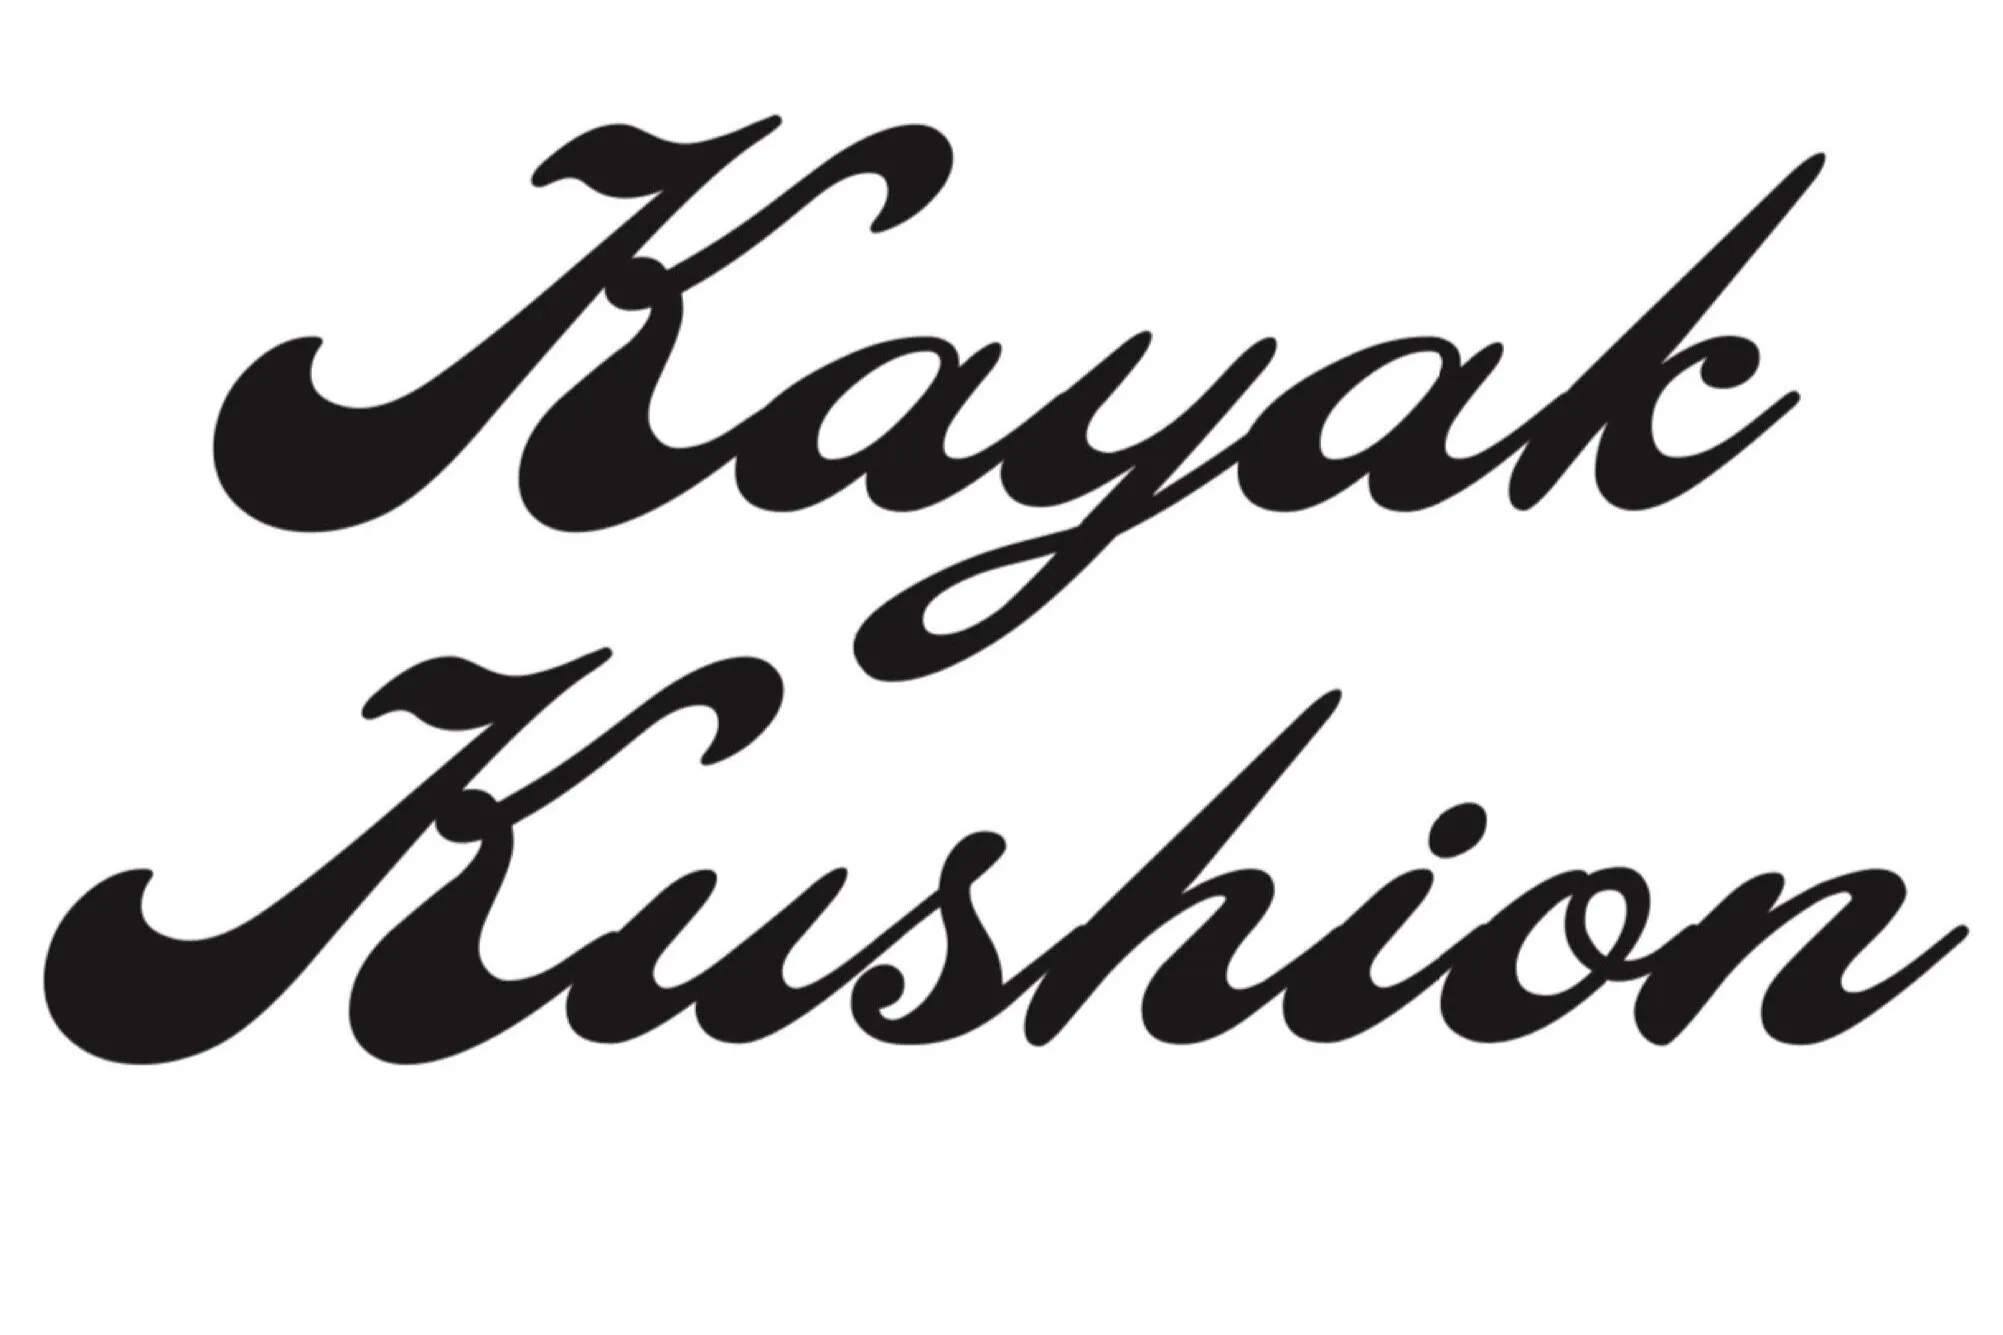 Kayak Kushion